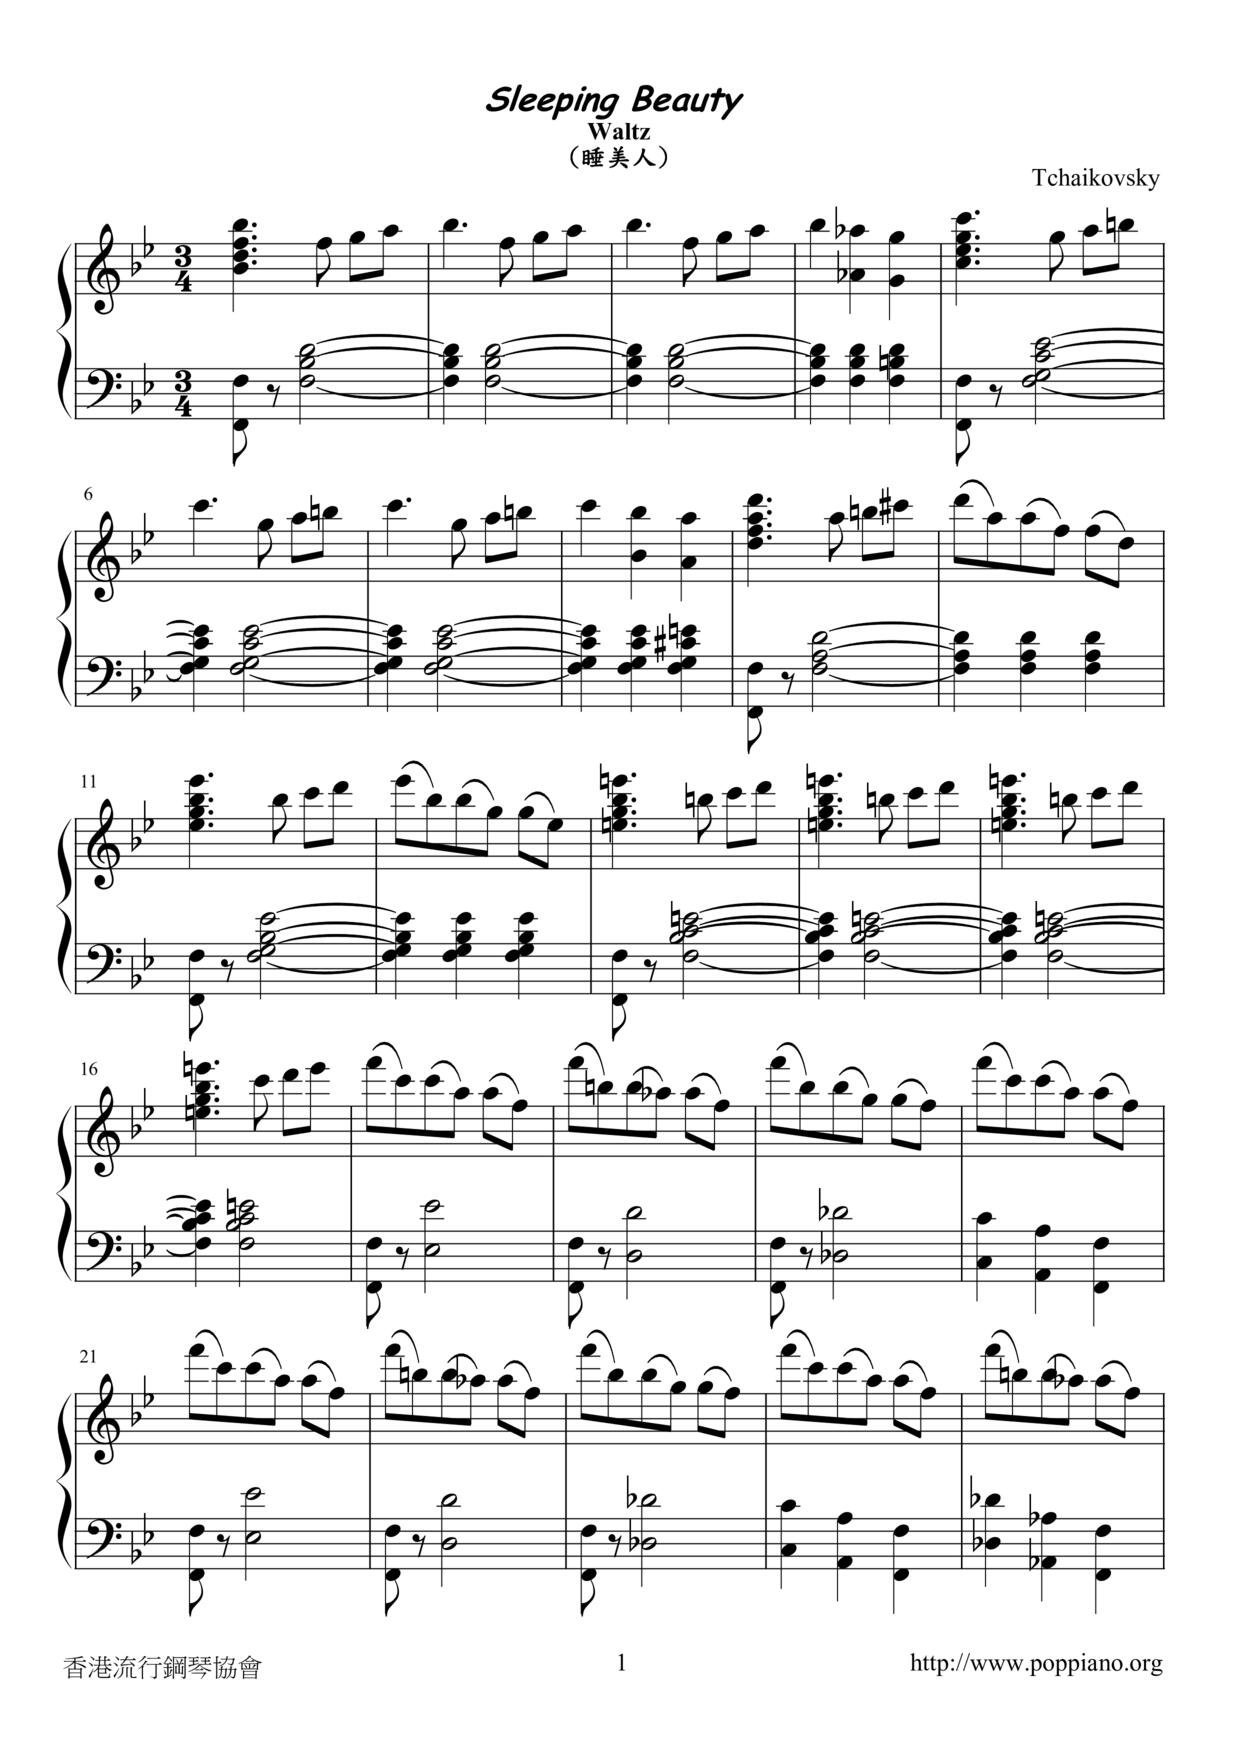 Waltz From Sleeping Beautyピアノ譜